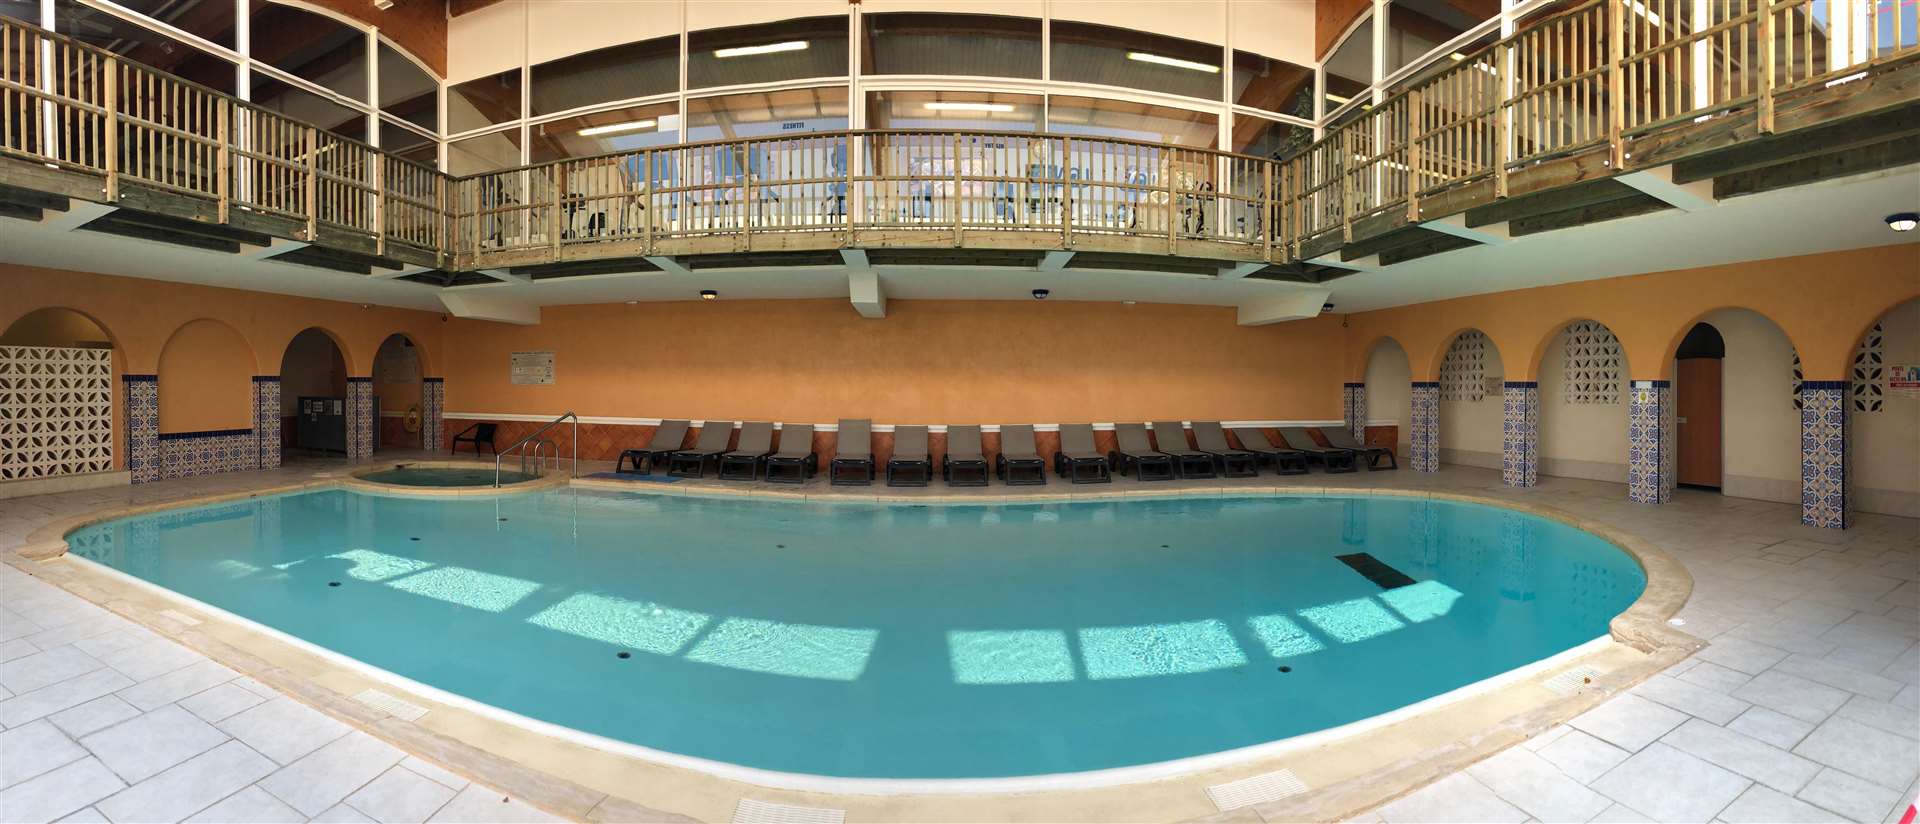 The indoor pool (7102824)